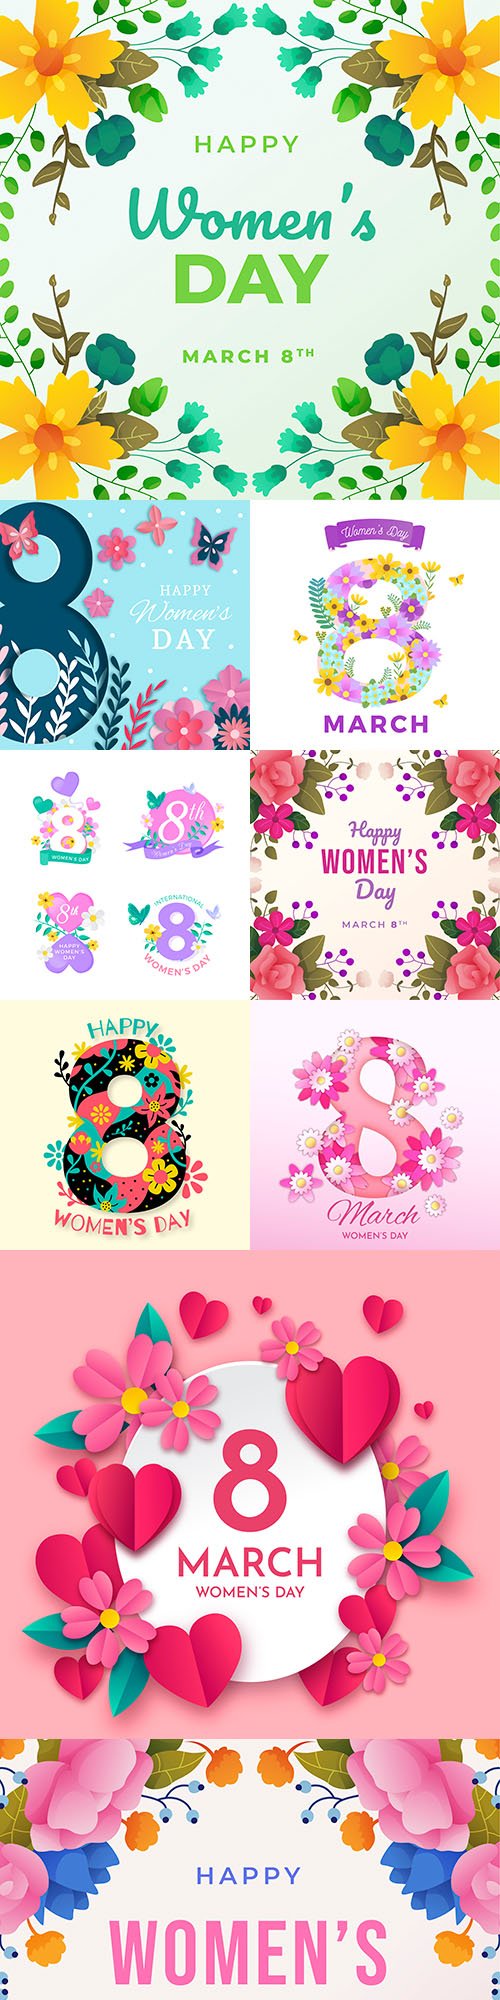 March 8 Women's Day illustration design concept 3